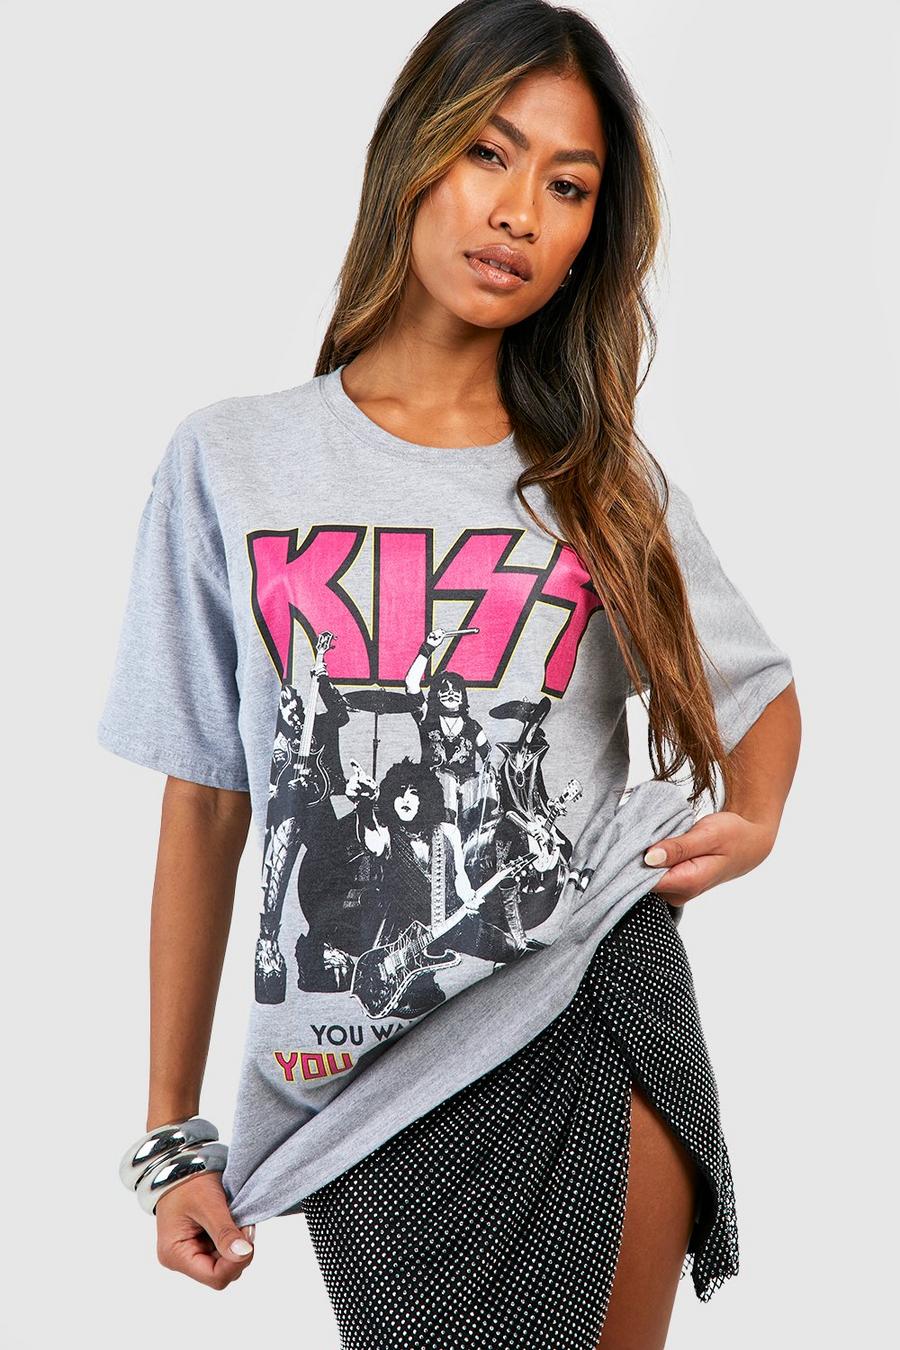 Camiseta con estampado de Kiss Festival Band, Grey gris